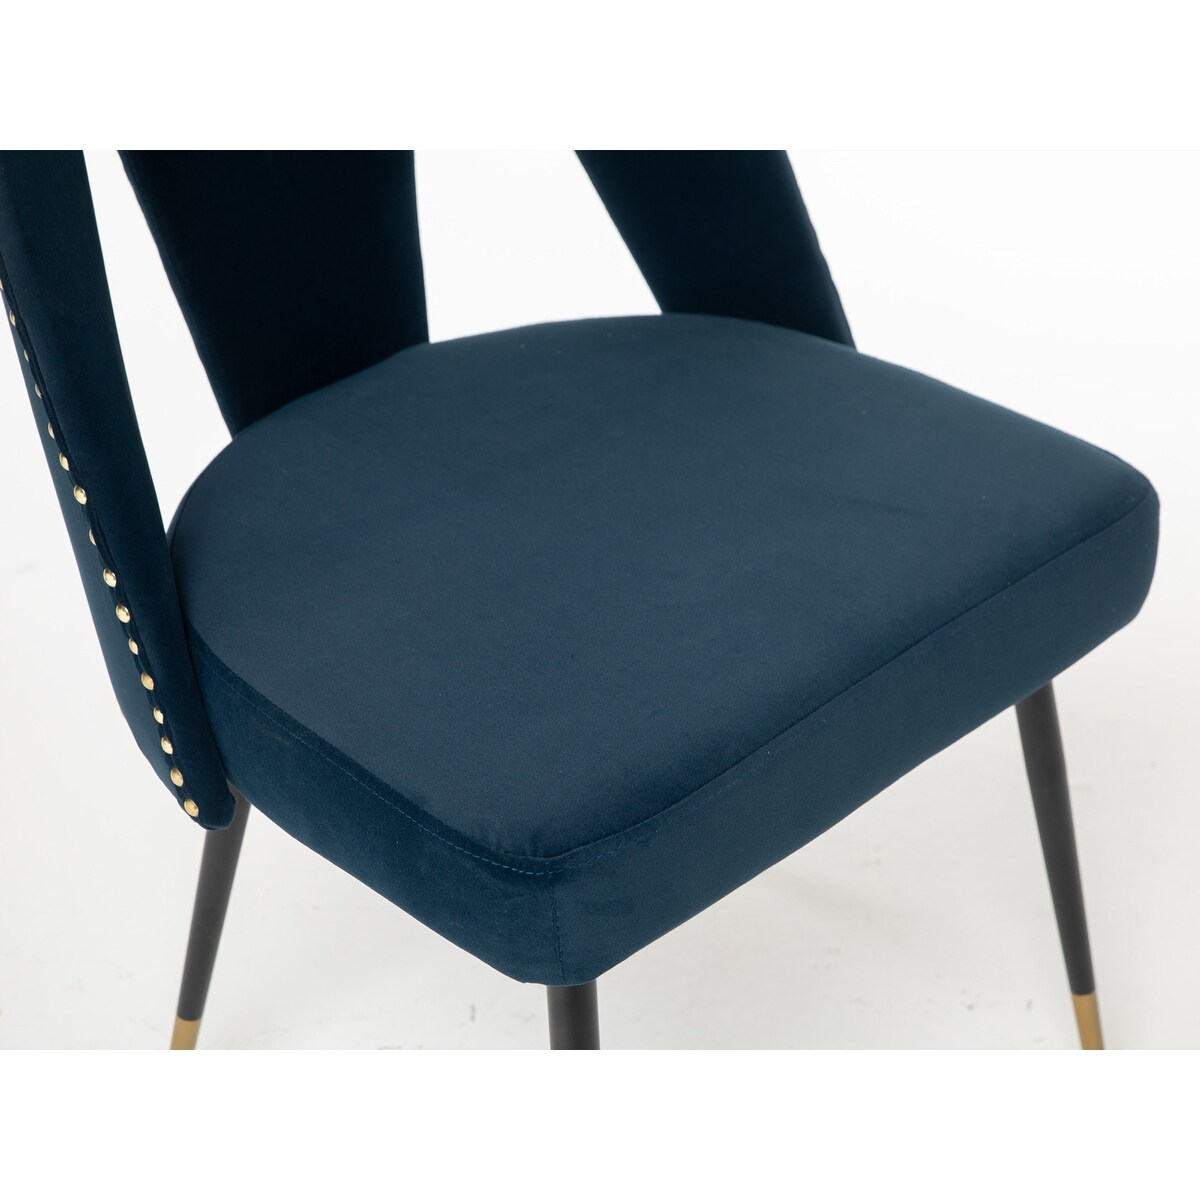 Velvet Upholstered Dining Chair with Nailheads,Set of 2